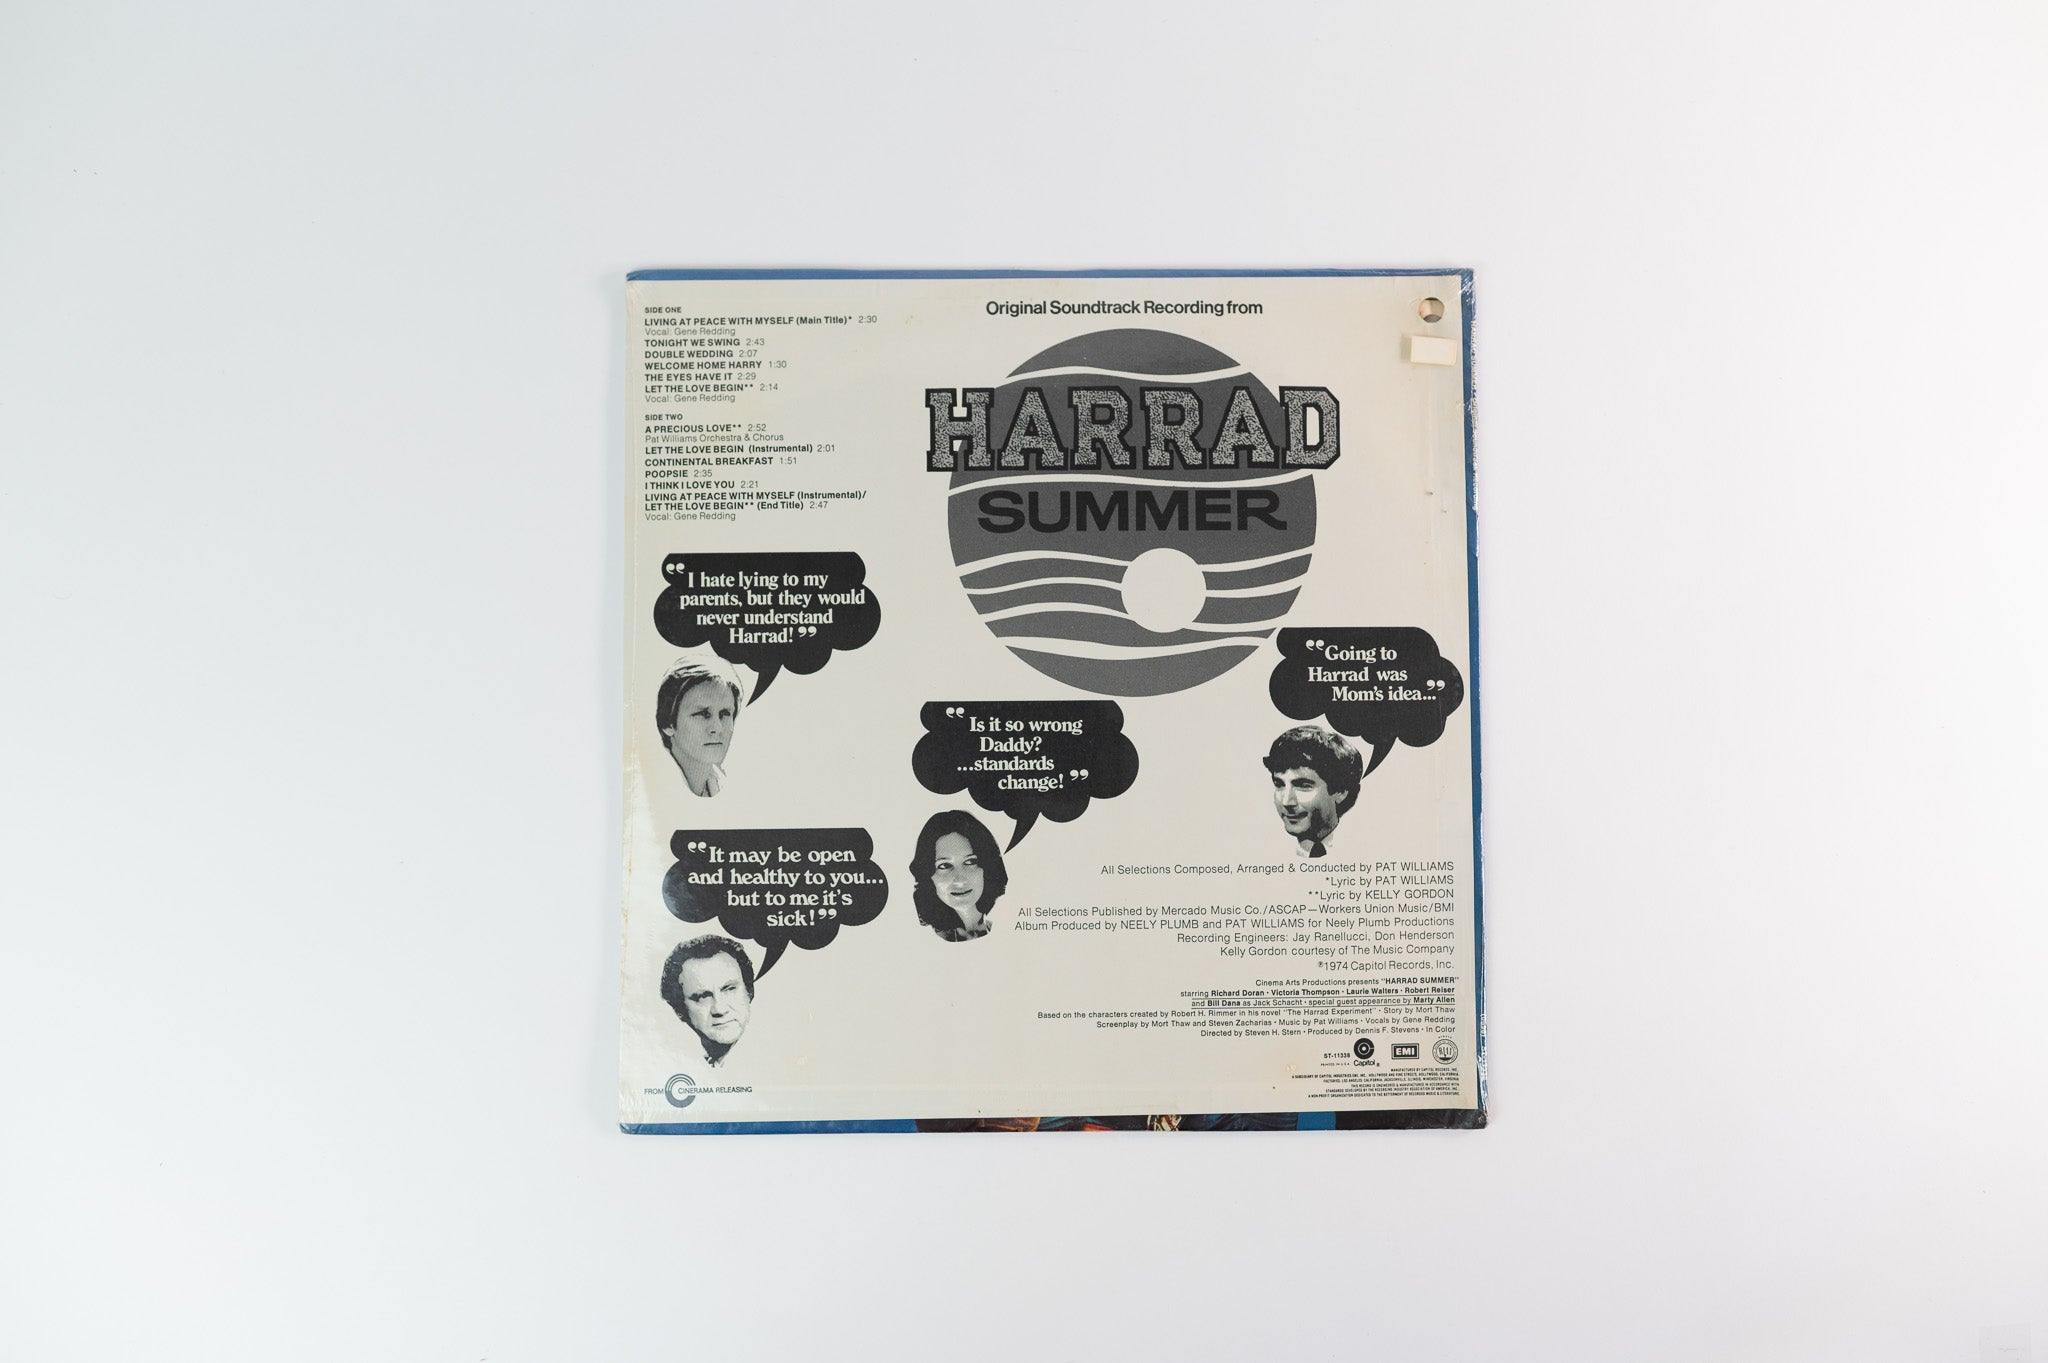 Patrick Williams - Harrad Summer (Original Soundtrack) on Capitol Sealed